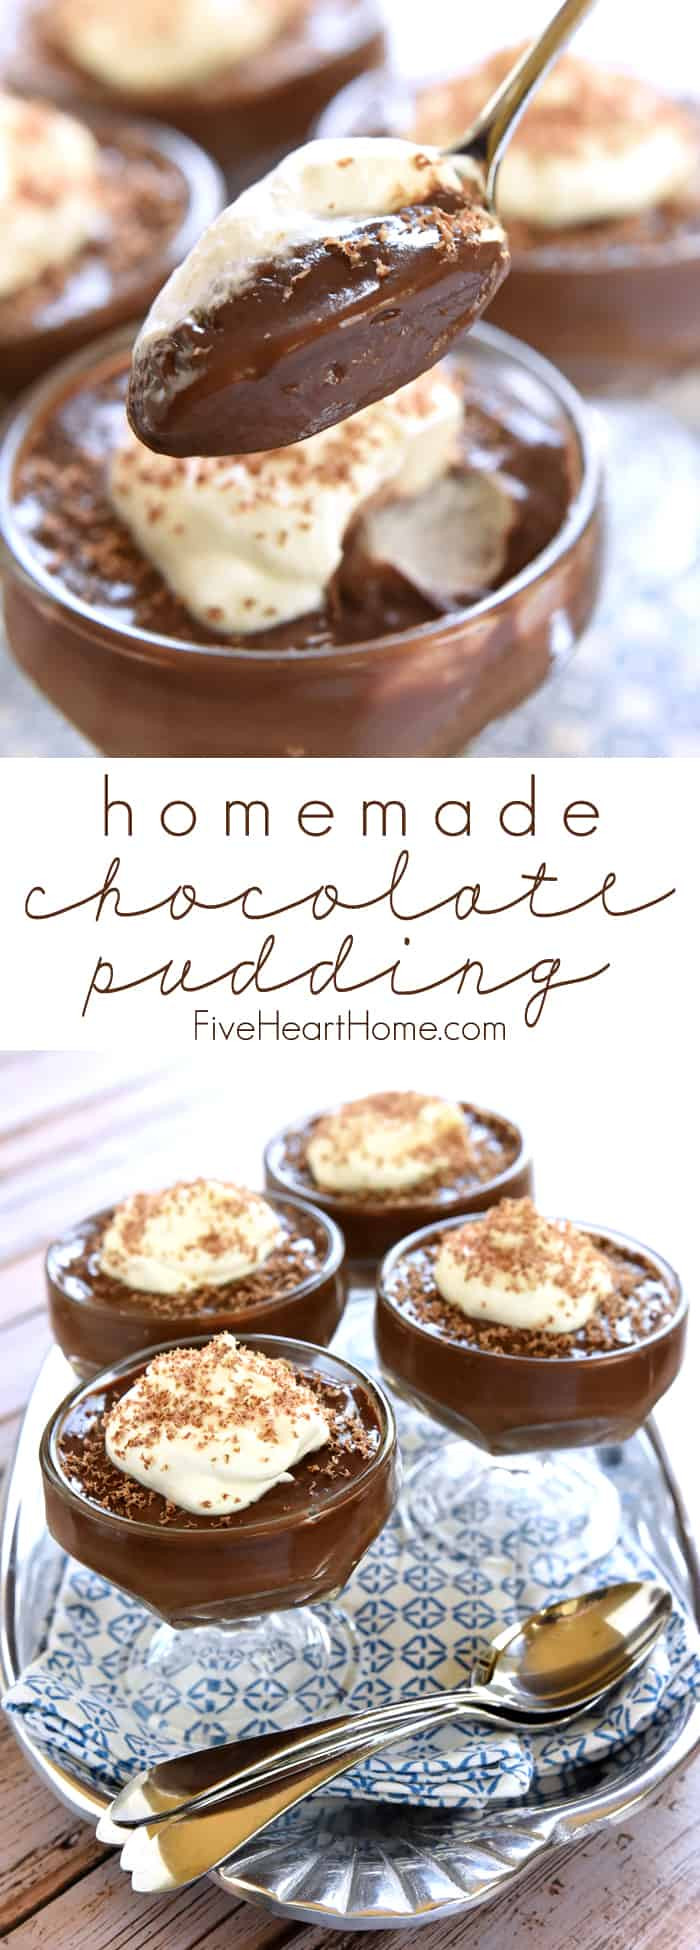 Easy Chocolate Puddings Recipes
 Homemade Chocolate Pudding • FIVEheartHOME